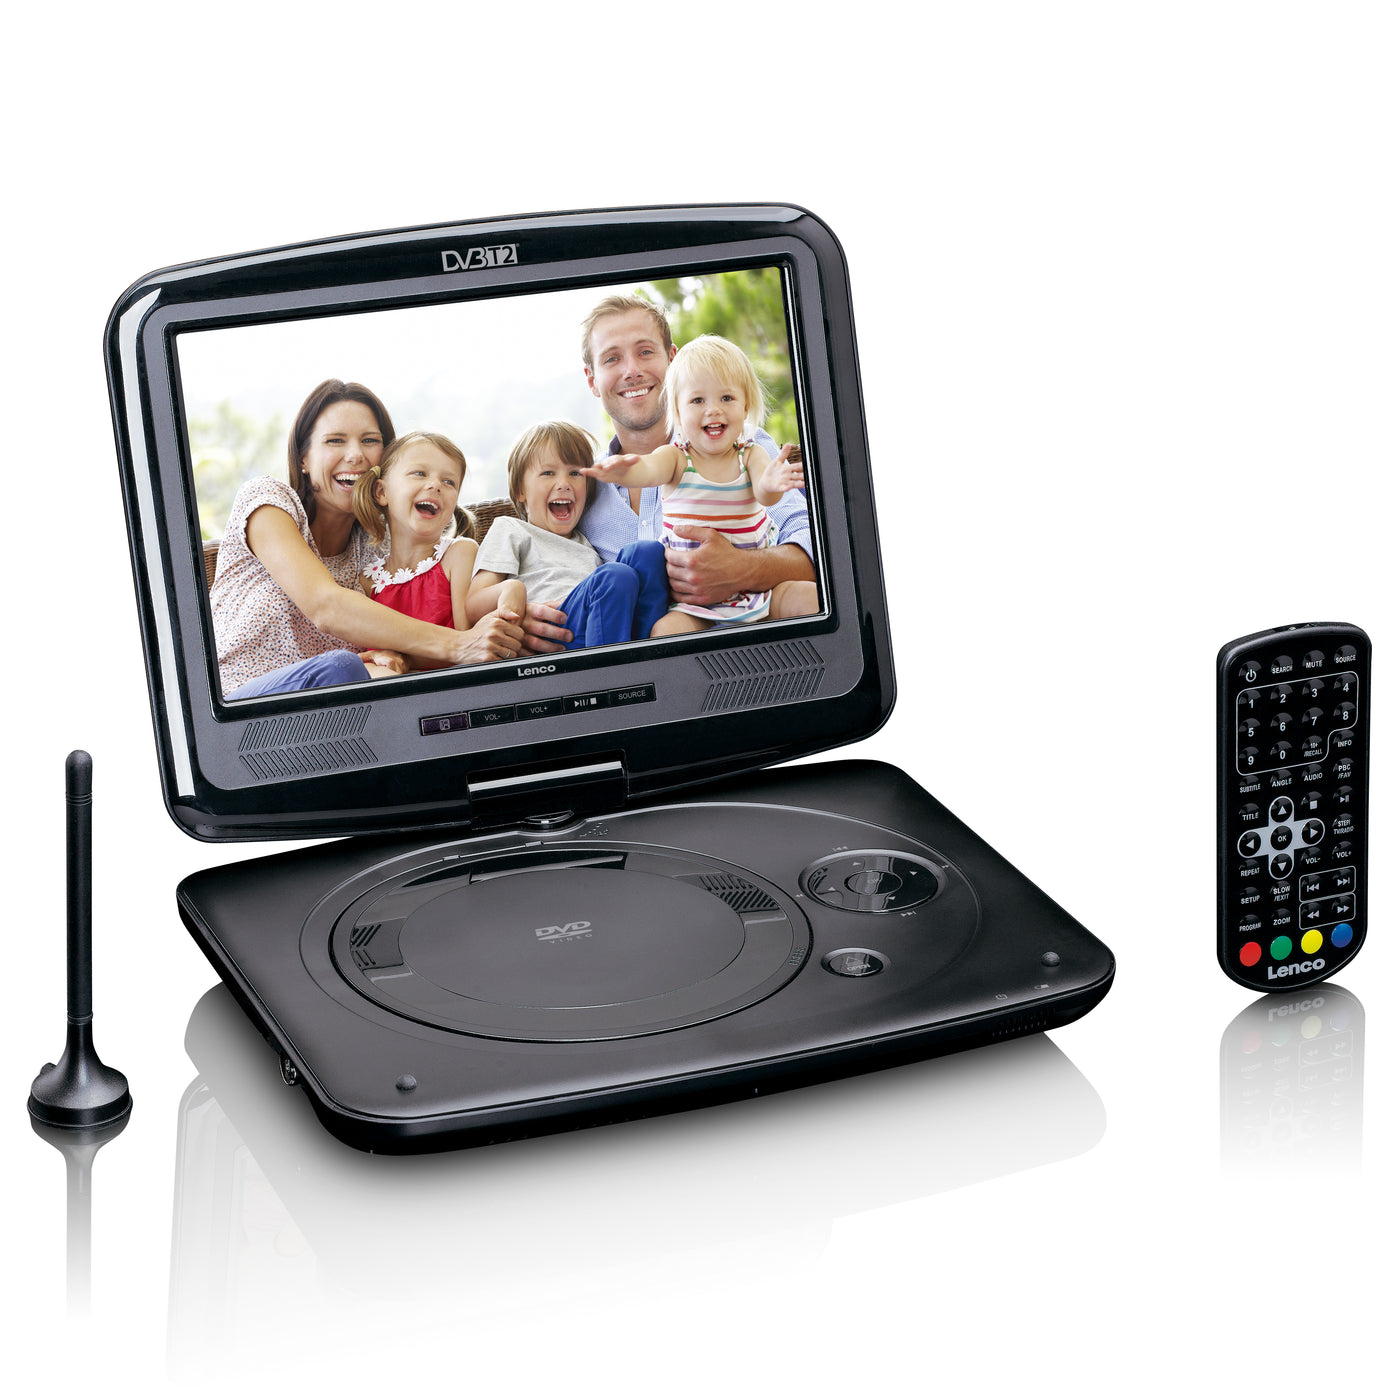 LENCO DVP-9463BK - 9" Portable DVD-player with HD DBV T2 reception - Black